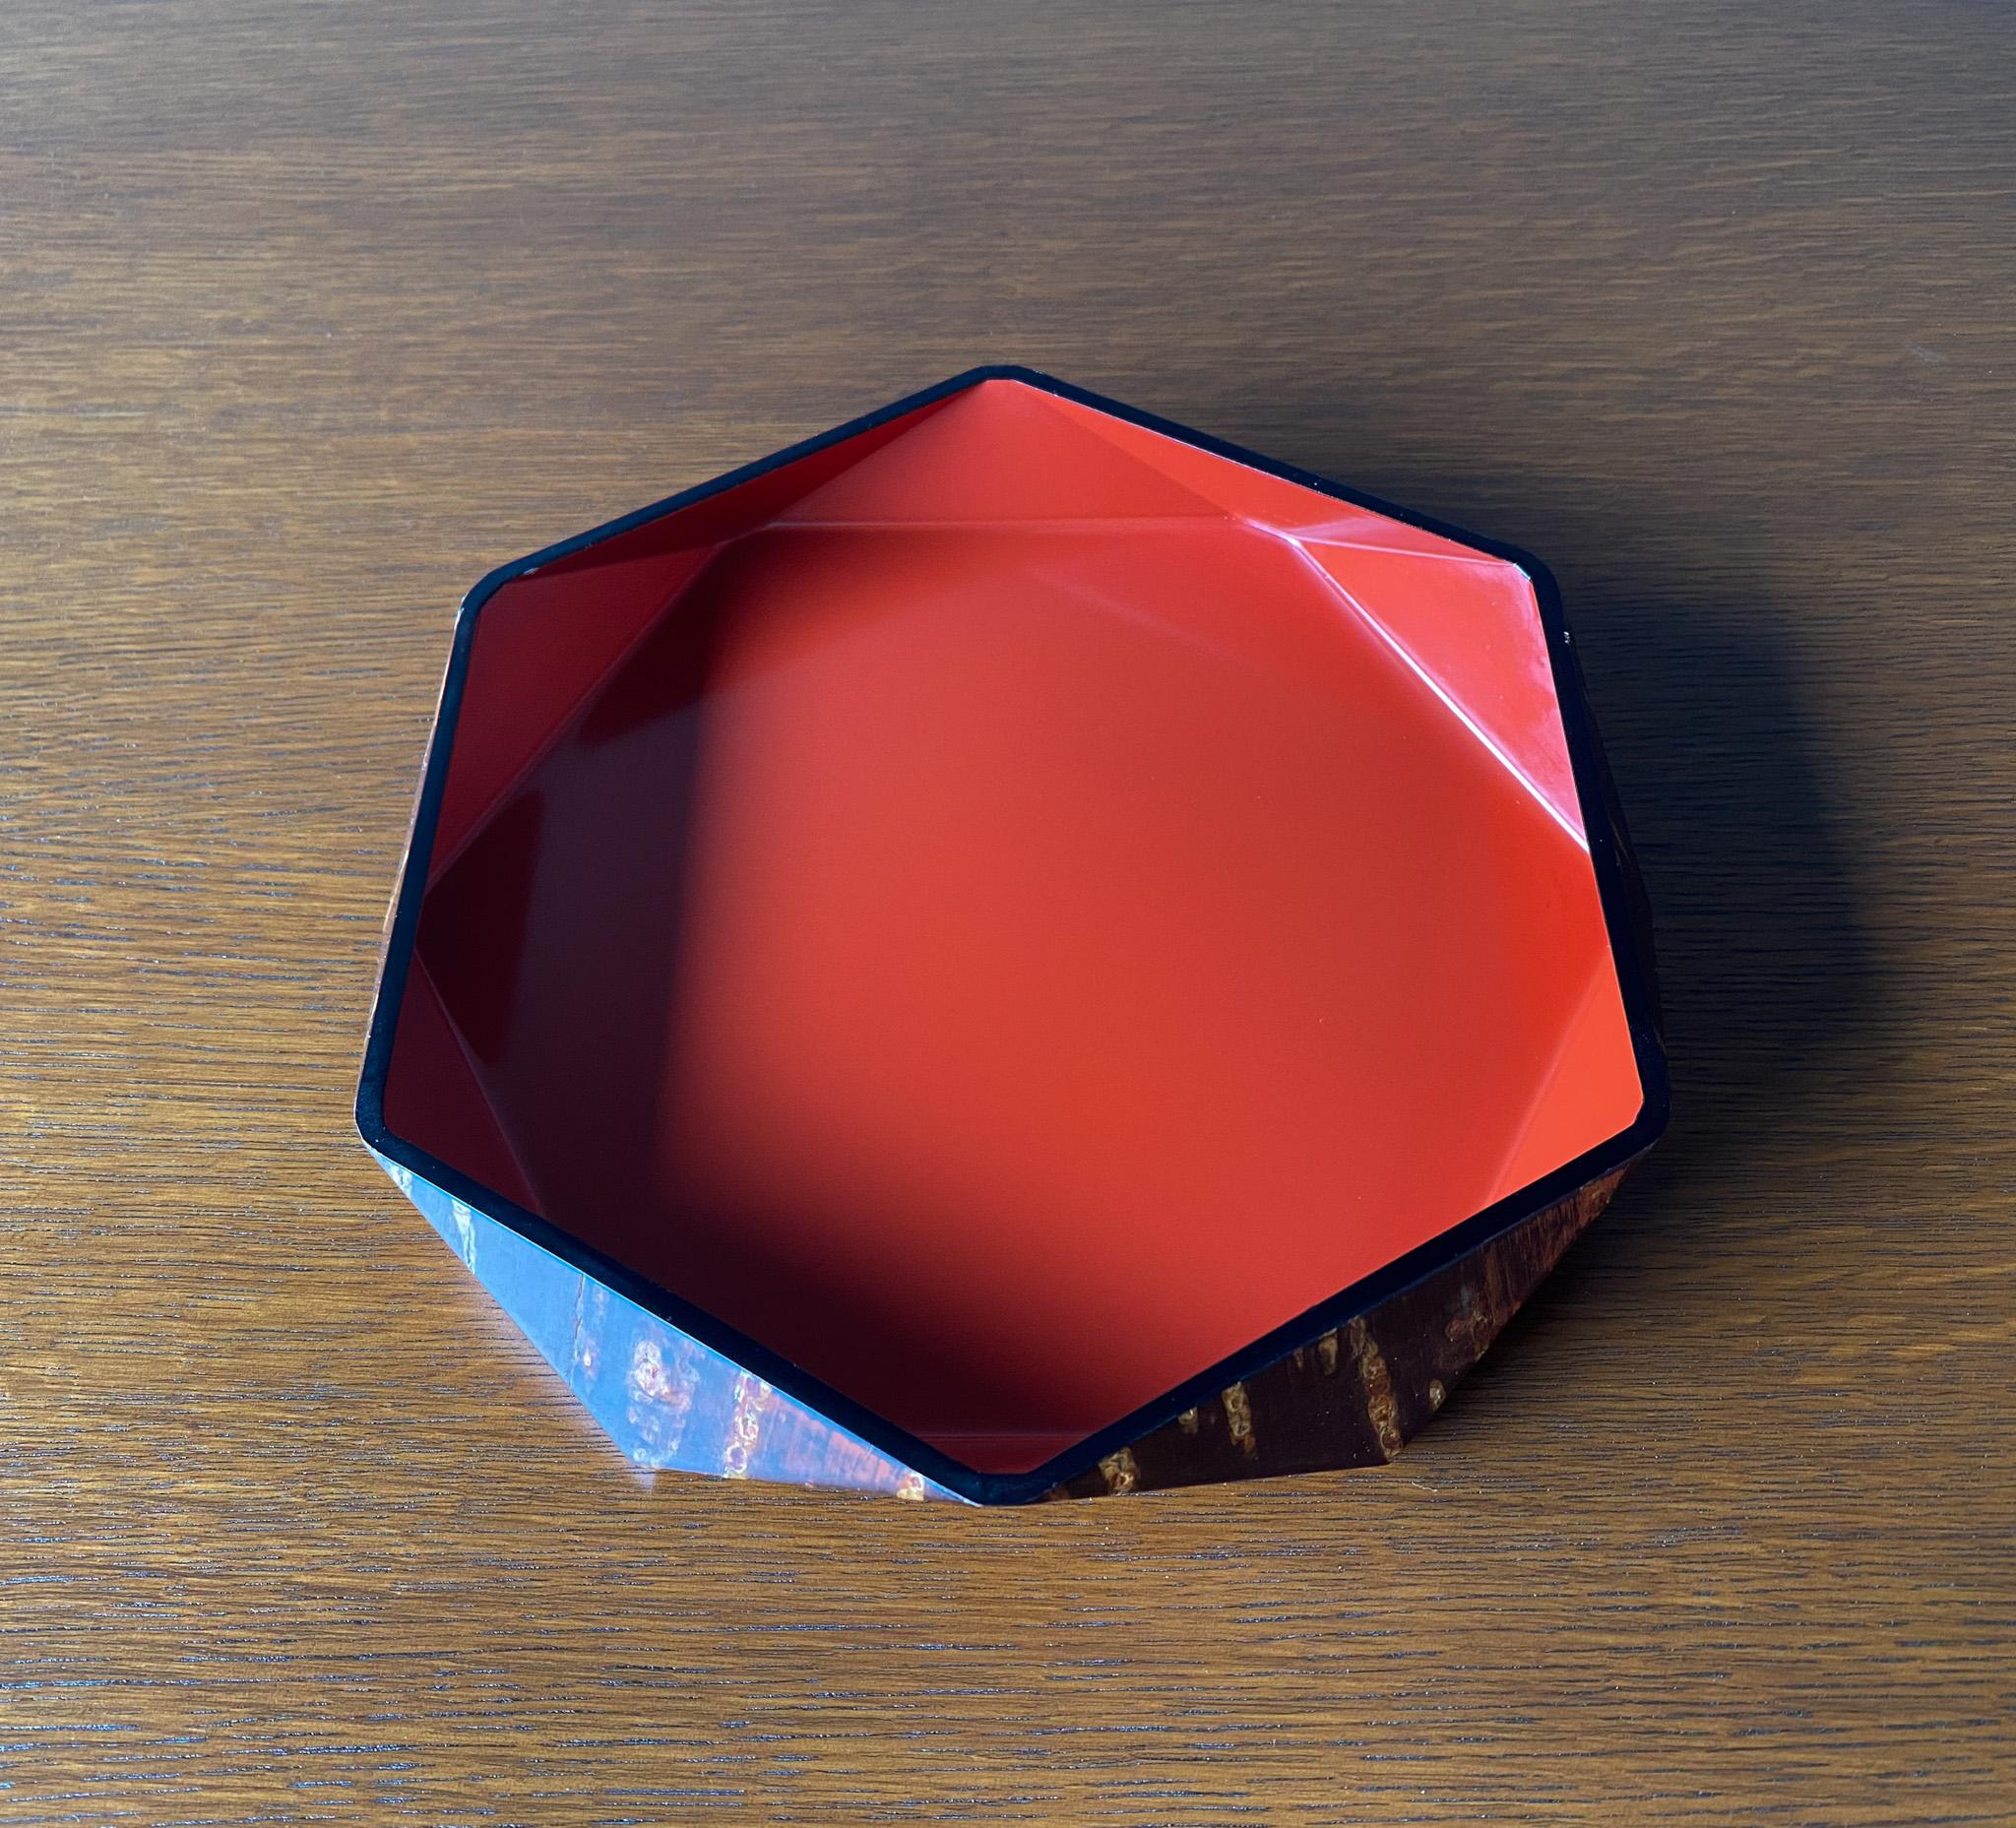 Kusachu Hexagonal Cherry Bark Bowl / Tray, Japan, 20th Century  For Sale 8